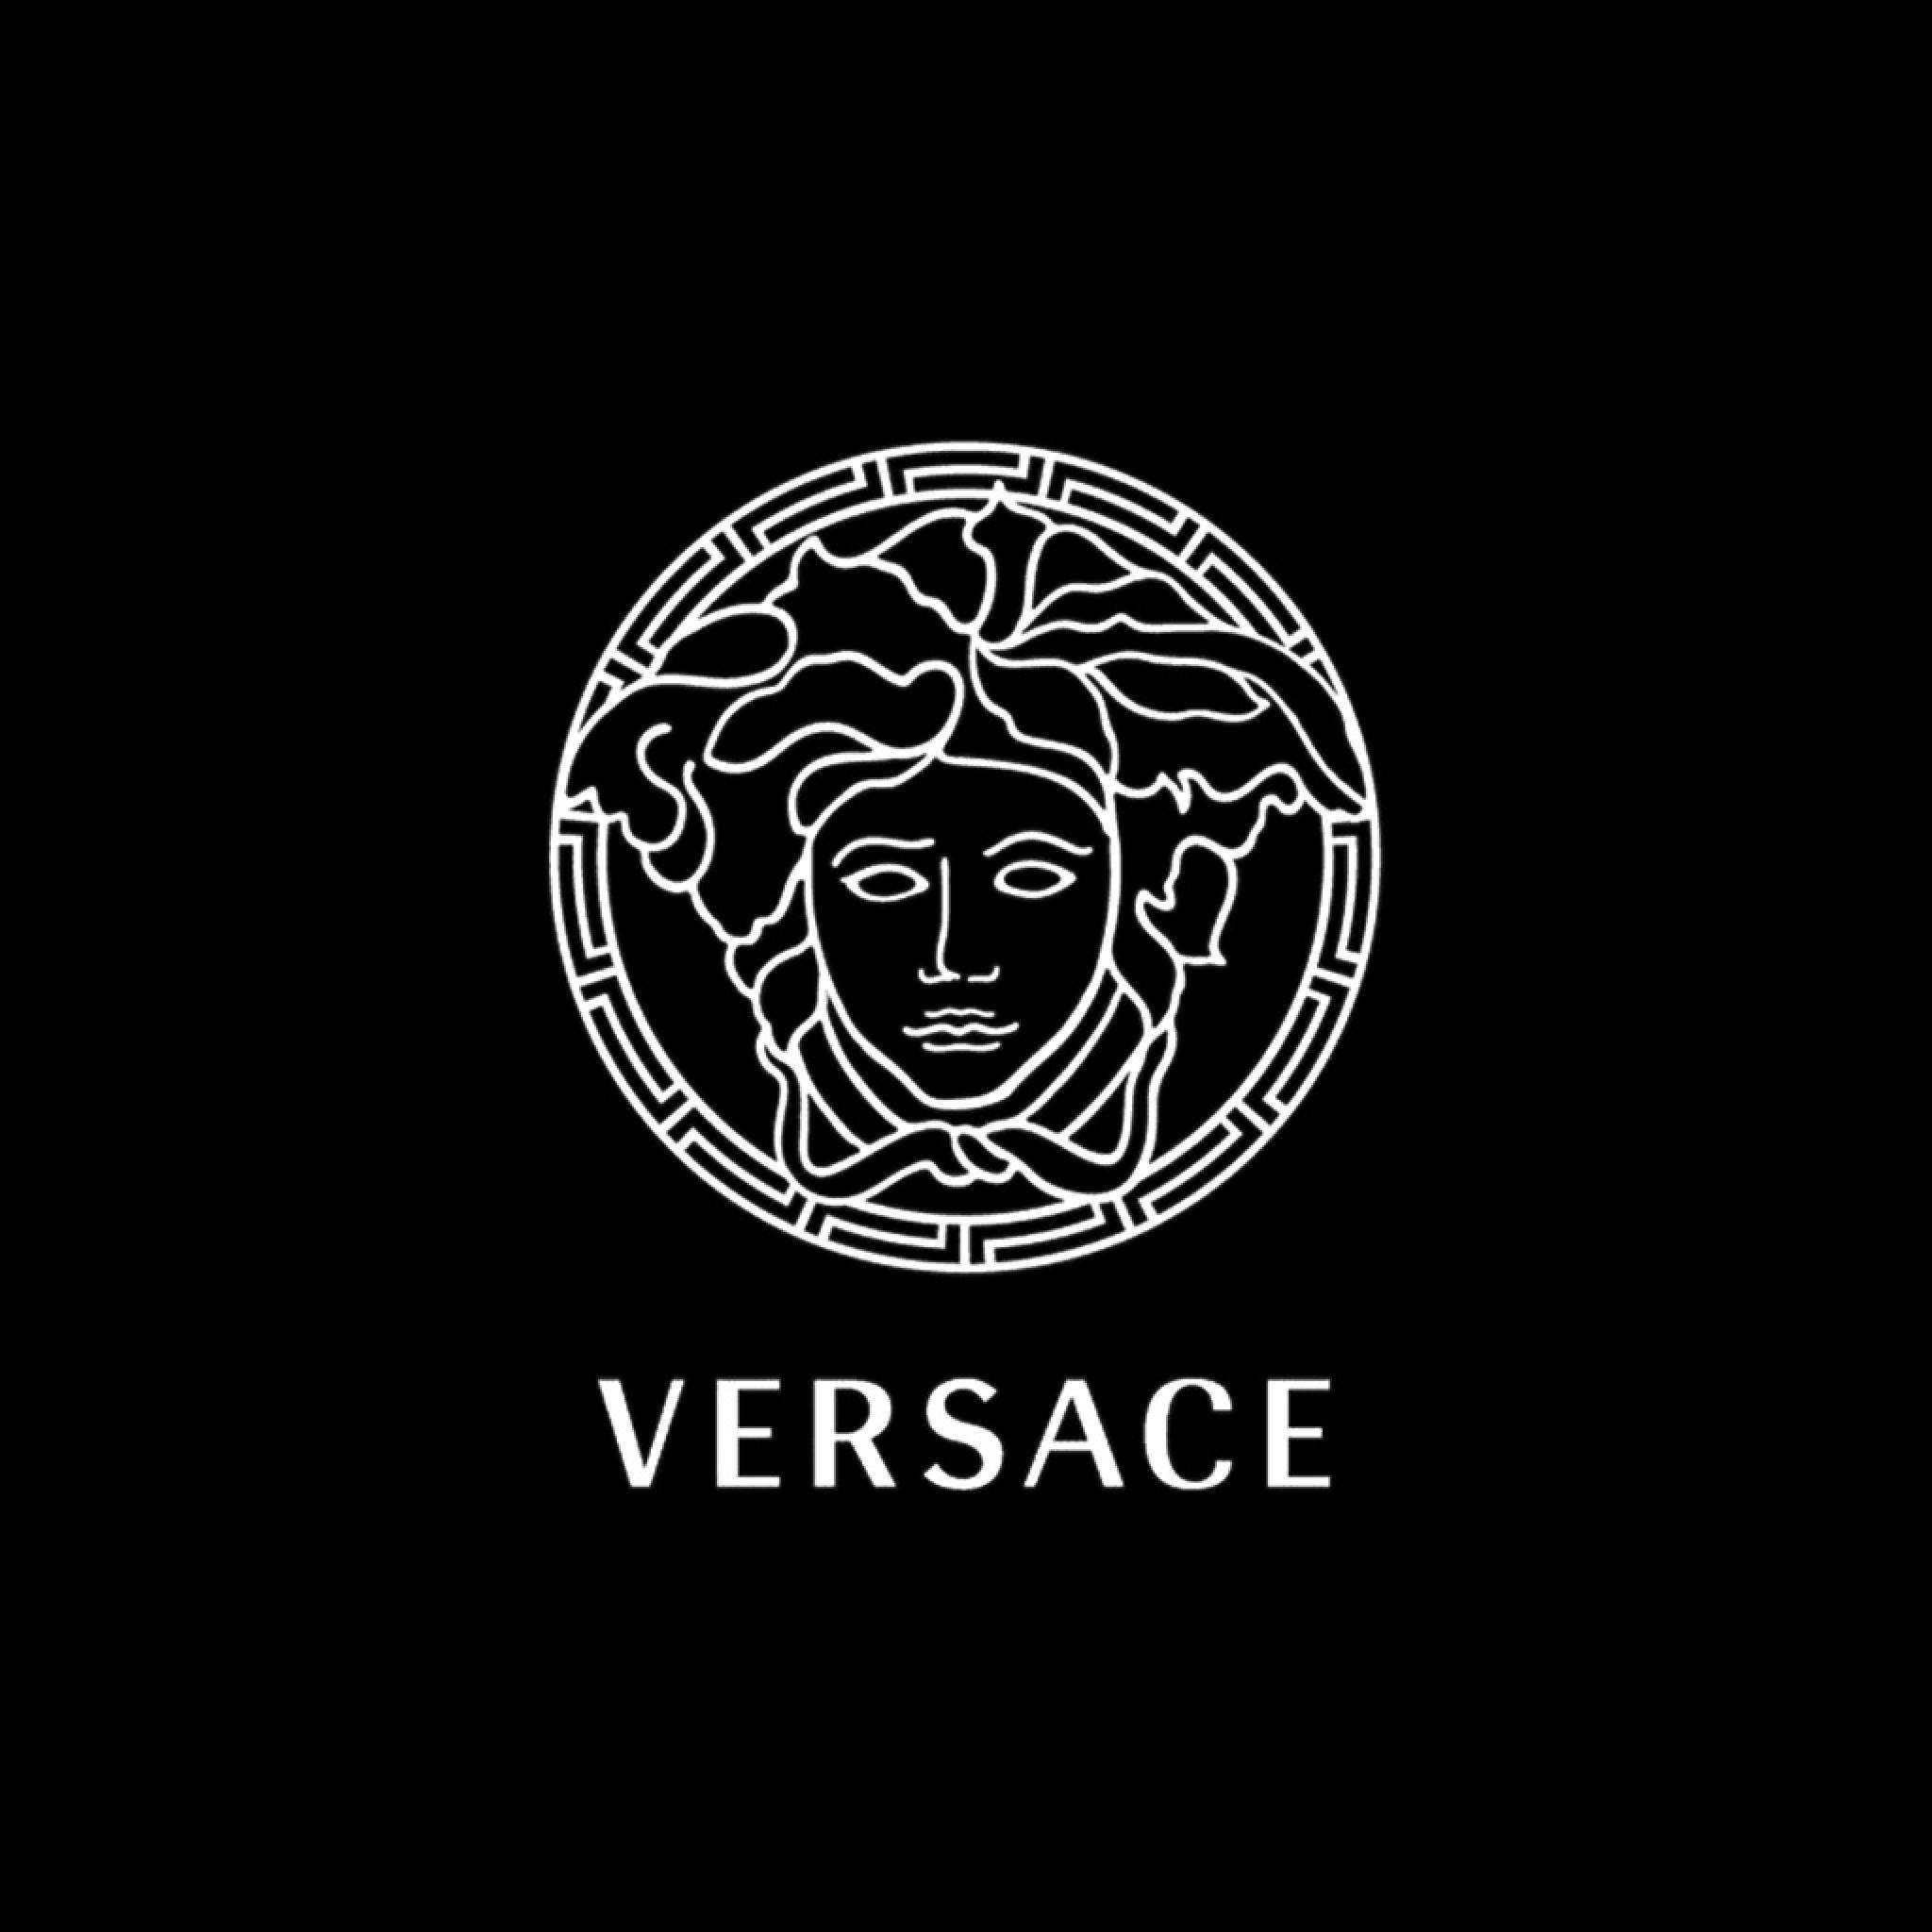 Buy Versace Wallpaper Online In India  Etsy India